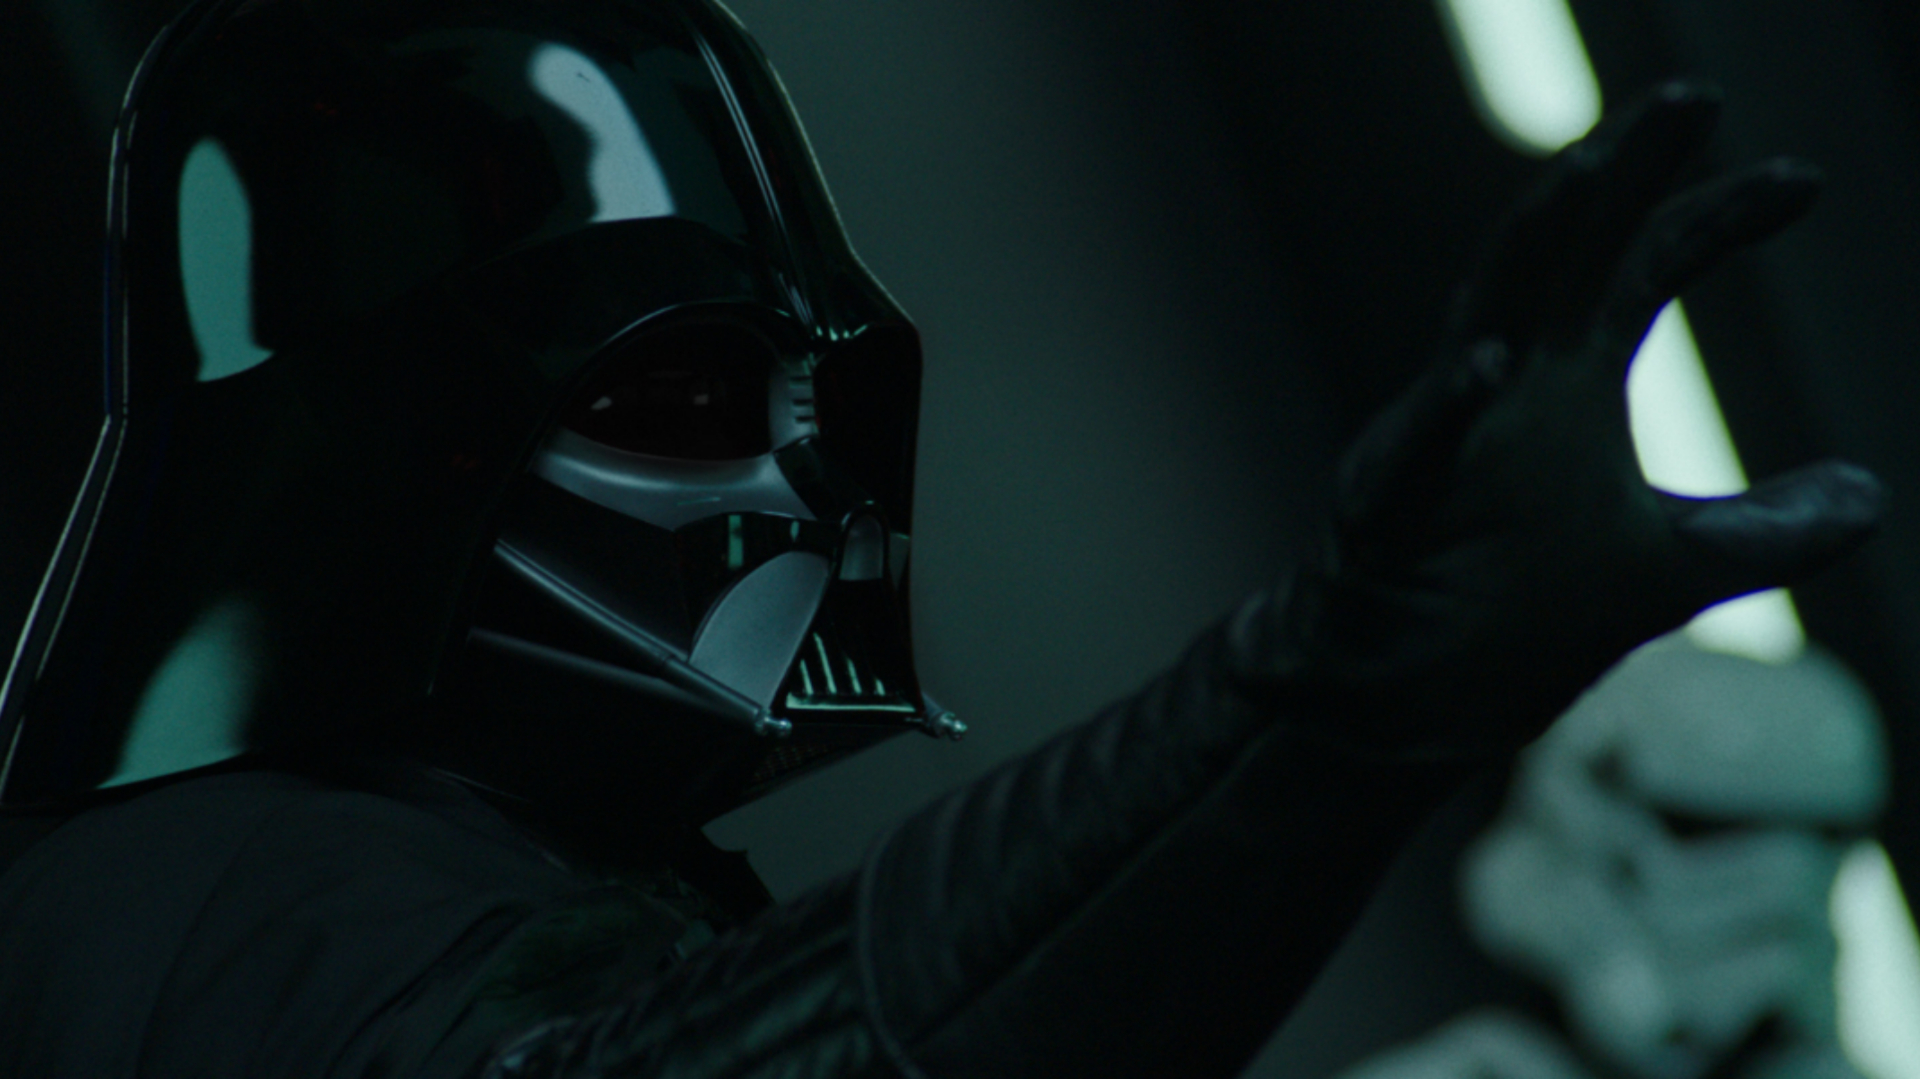 Star Wars fans react to “spine-chilling” Darth Vader scenes in Obi-Wan Kenobi episode 4